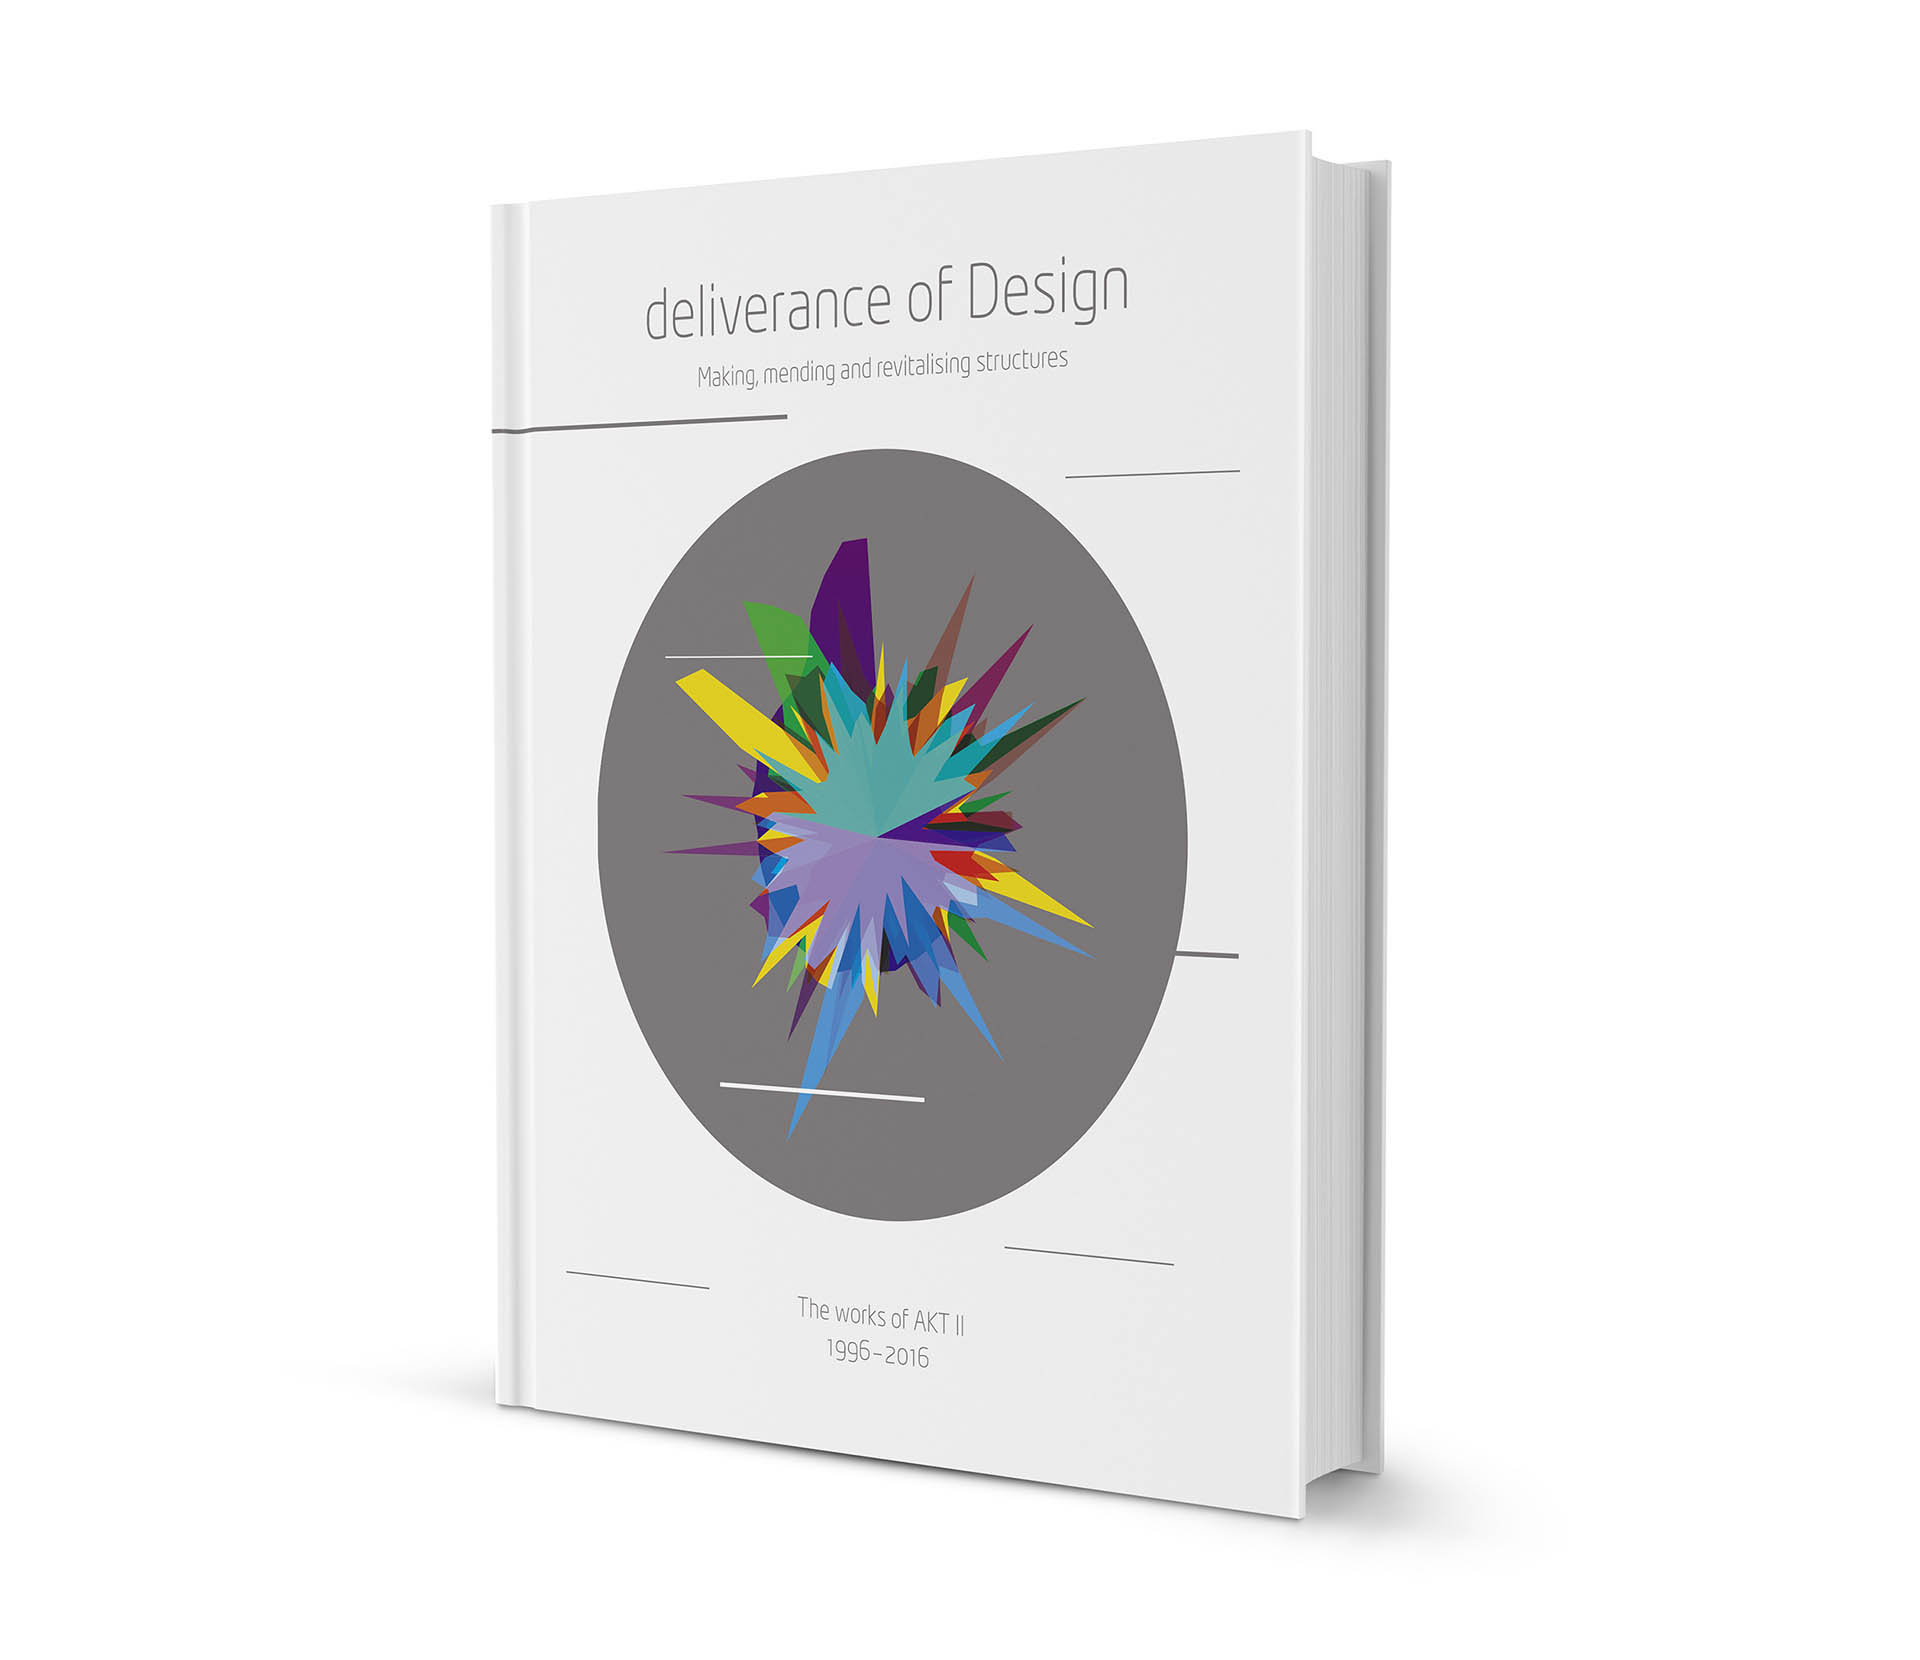 Book design for London based design-led structural and civil engineering consultancy AKT II, deliverance of Design